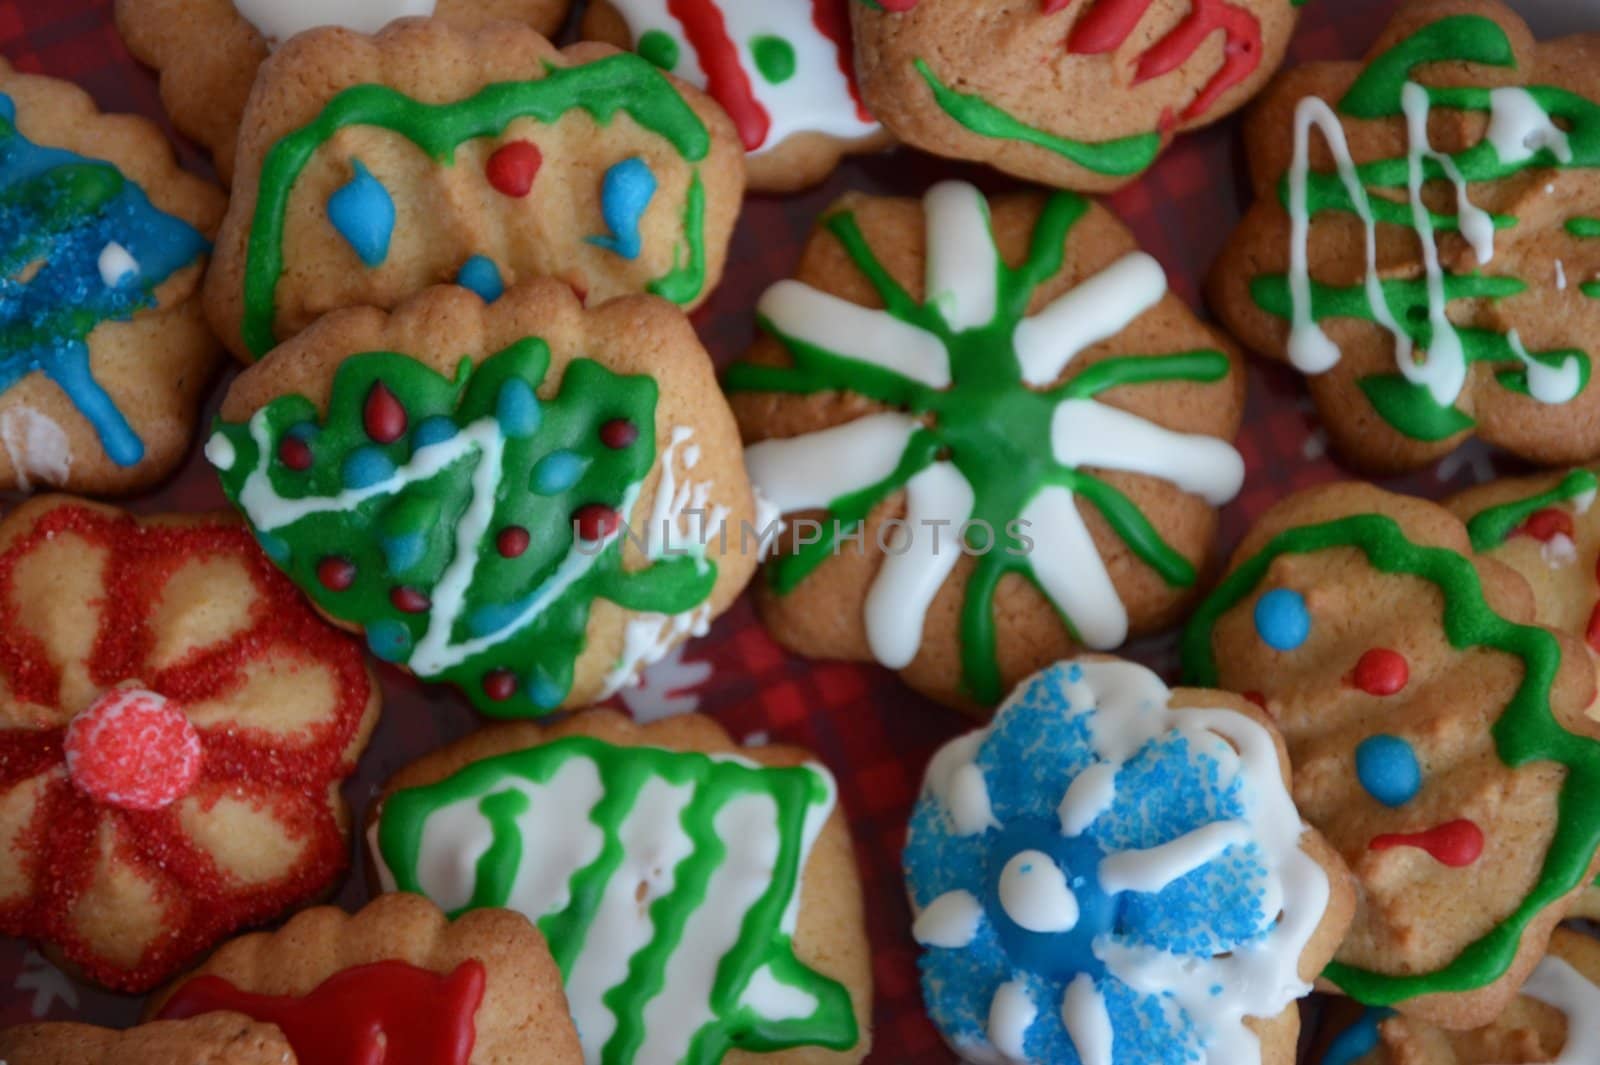 Christmas cookies by northwoodsphoto